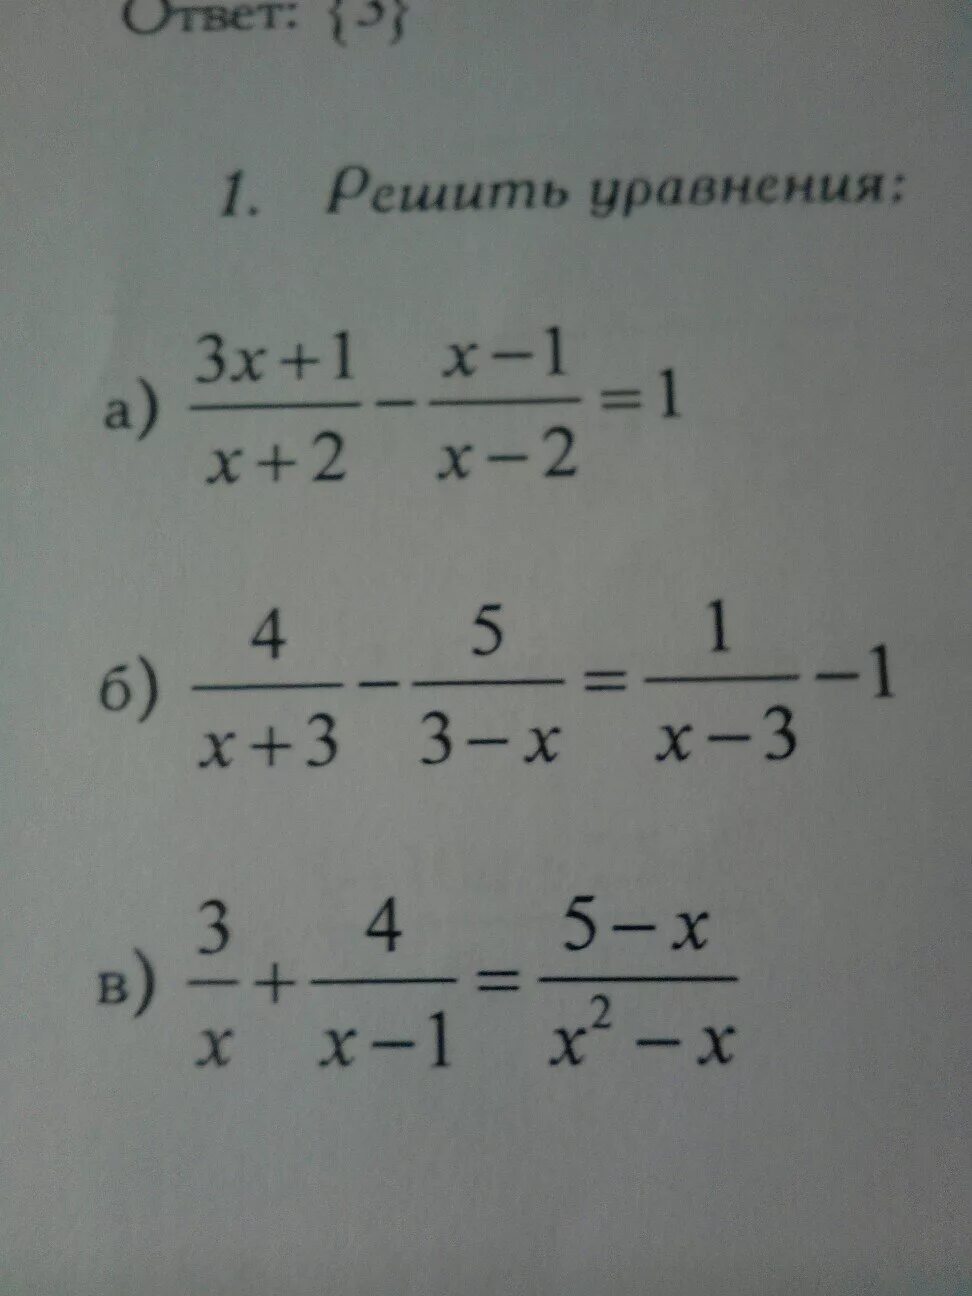 1.3 2x. X1+2x2+3x3. 3x+1. X-1/2=4+5x/3. 3x-1=1.